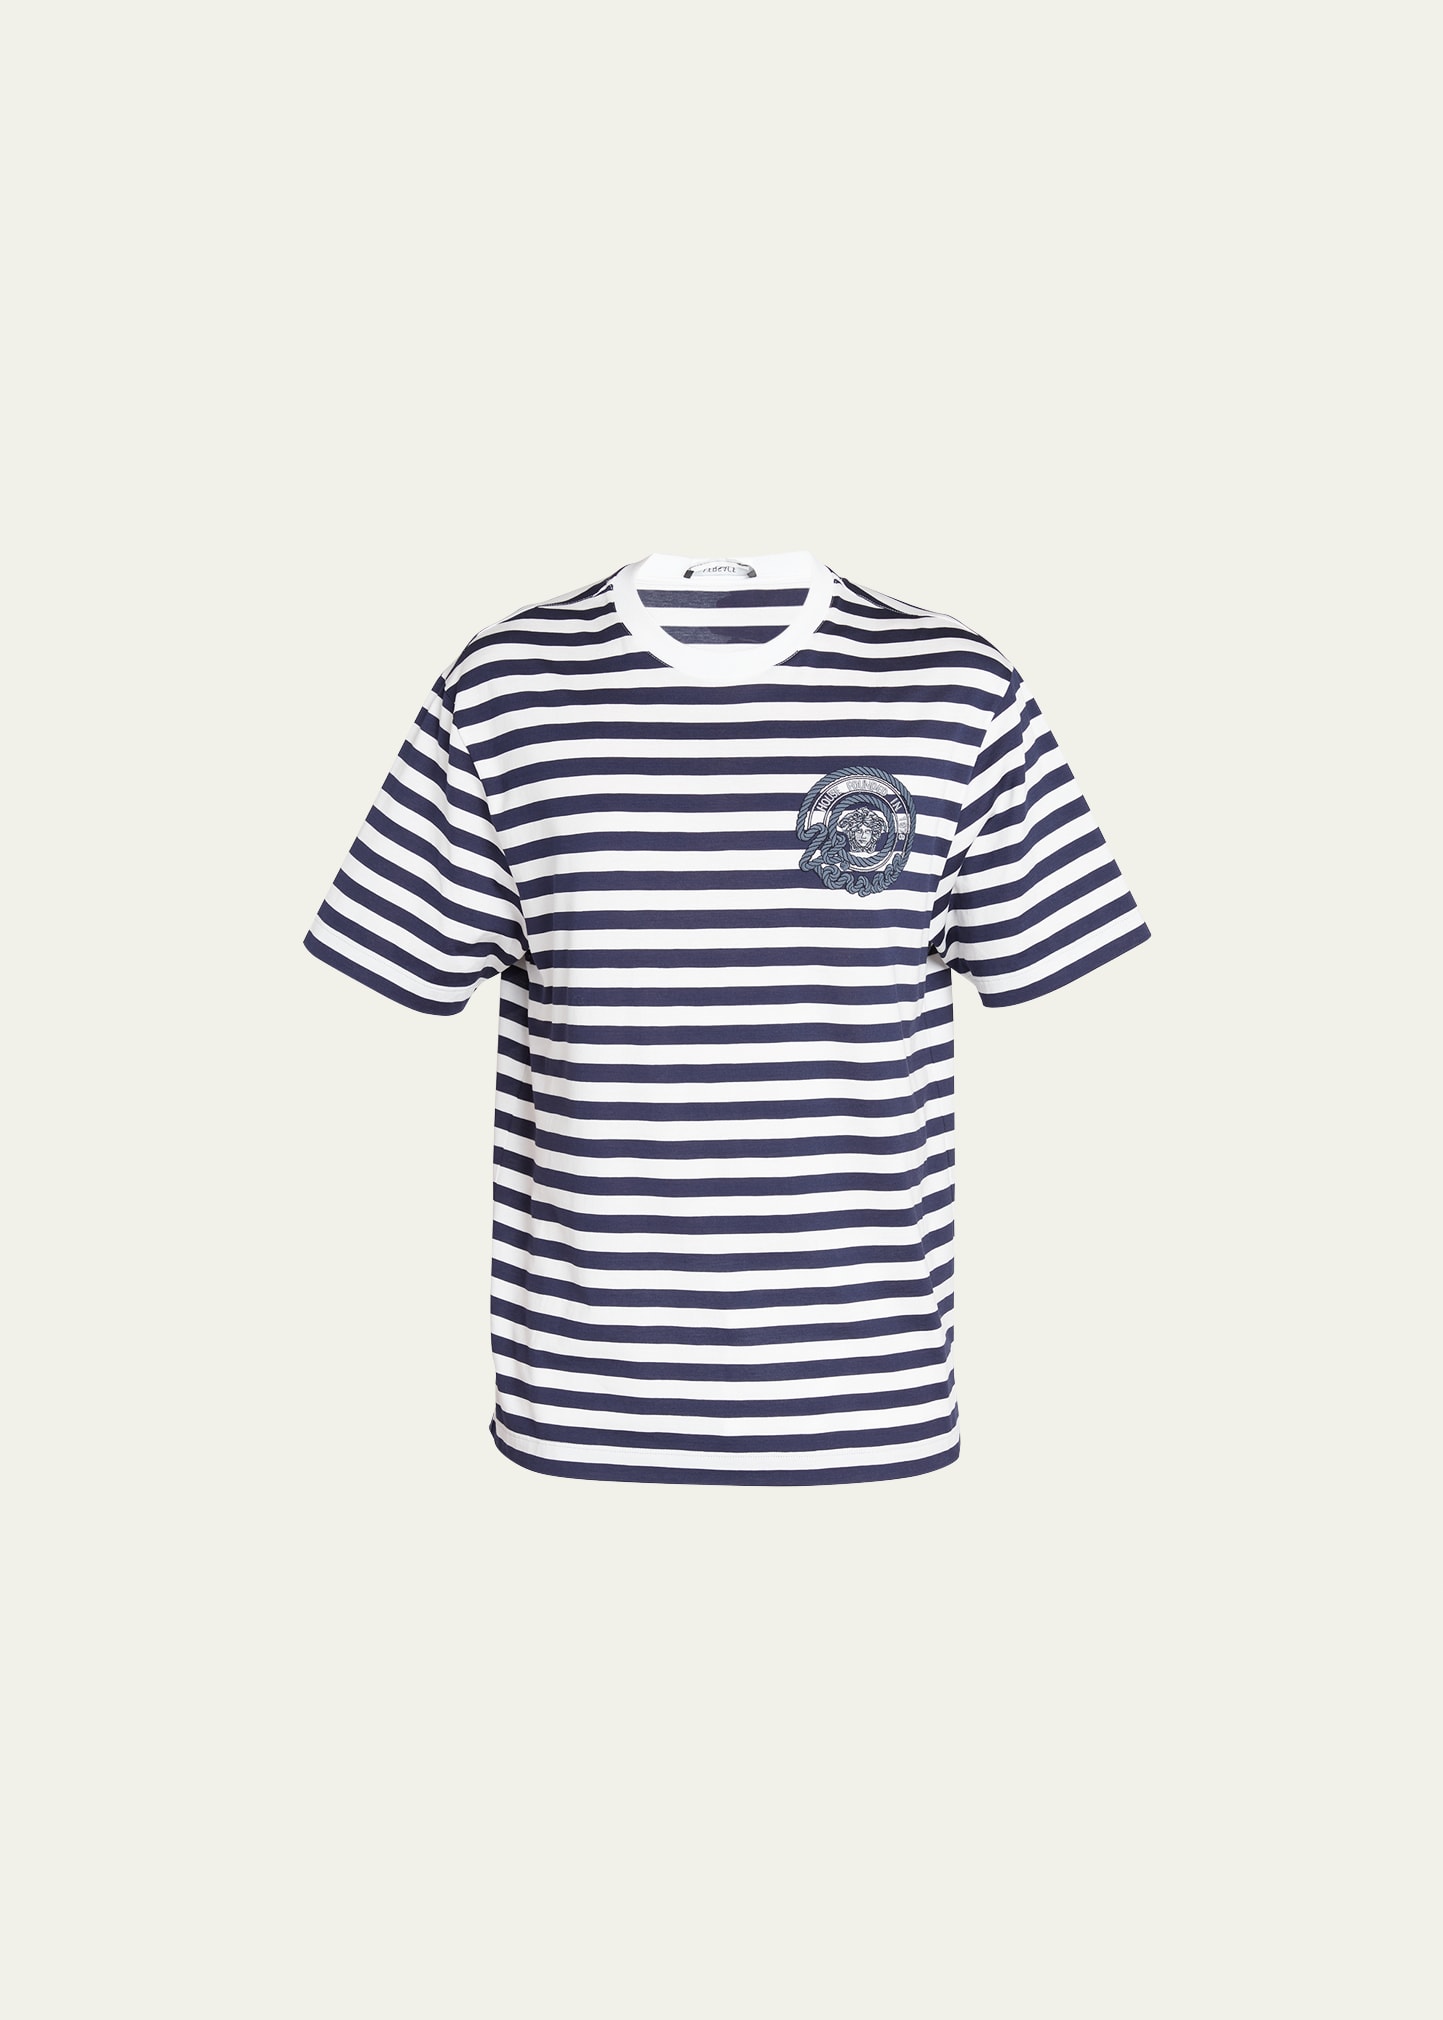 Versace Men's Sailor Stripe T-shirt With Crest In Whitenavy Blue